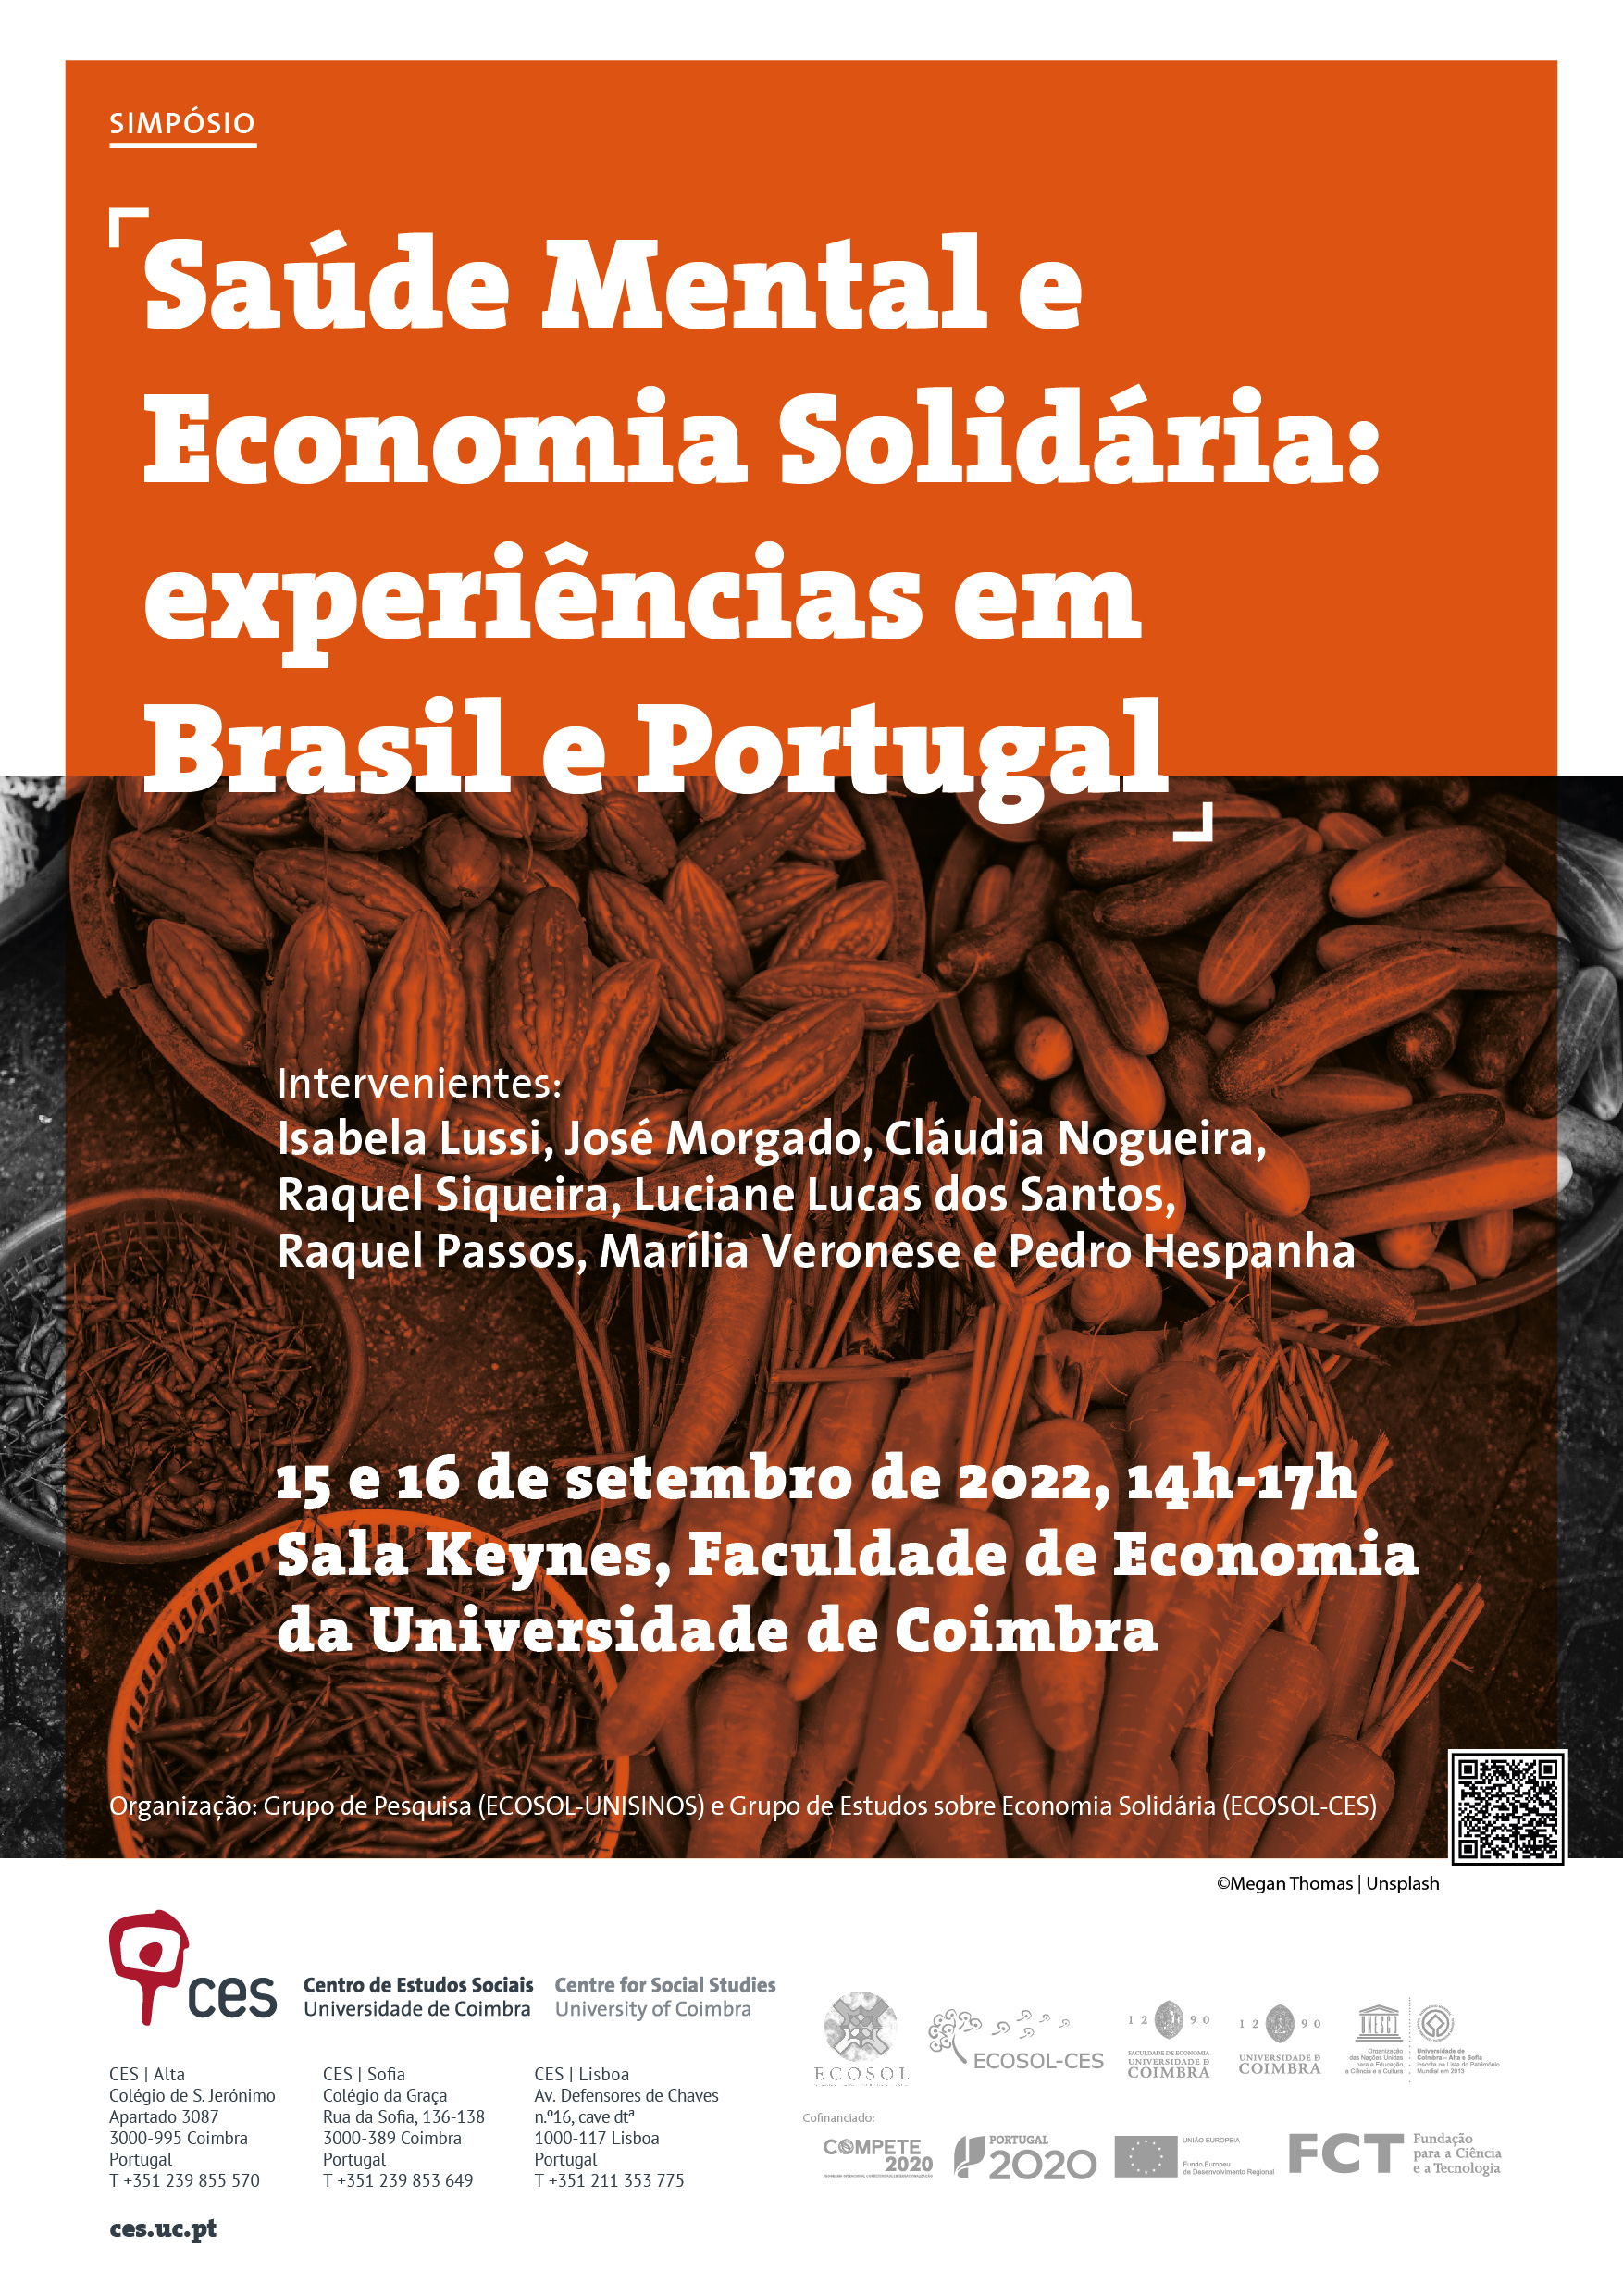 Saúde Mental e Economia Solidária: experiências em Brasil e Portugal<span id="edit_38969"><script>$(function() { $('#edit_38969').load( "/myces/user/editobj.php?tipo=evento&id=38969" ); });</script></span>